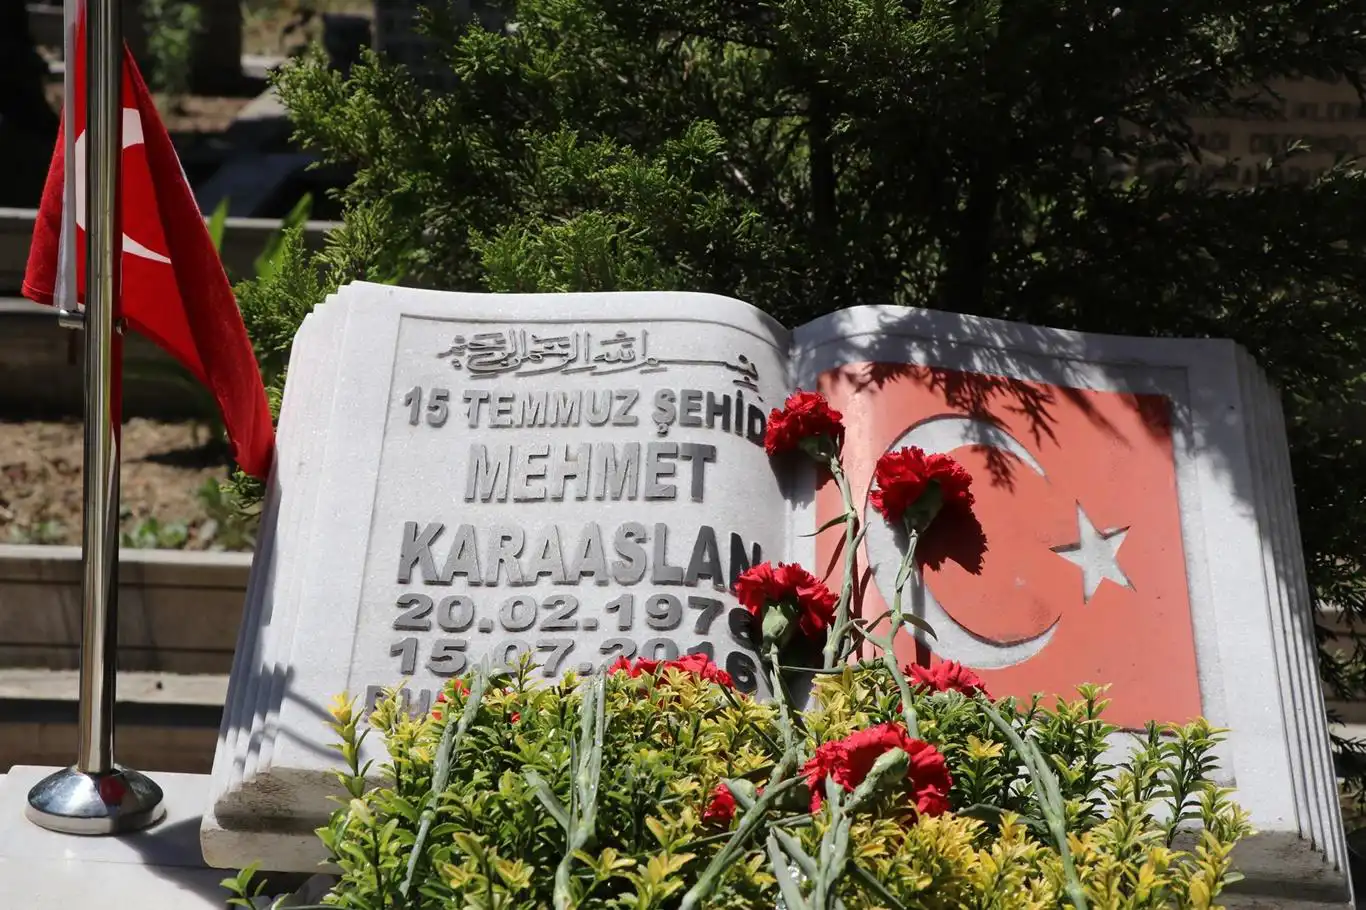 HÜDA PAR commemorates martyr Mehmet Karaaslan on July 15th anniversary